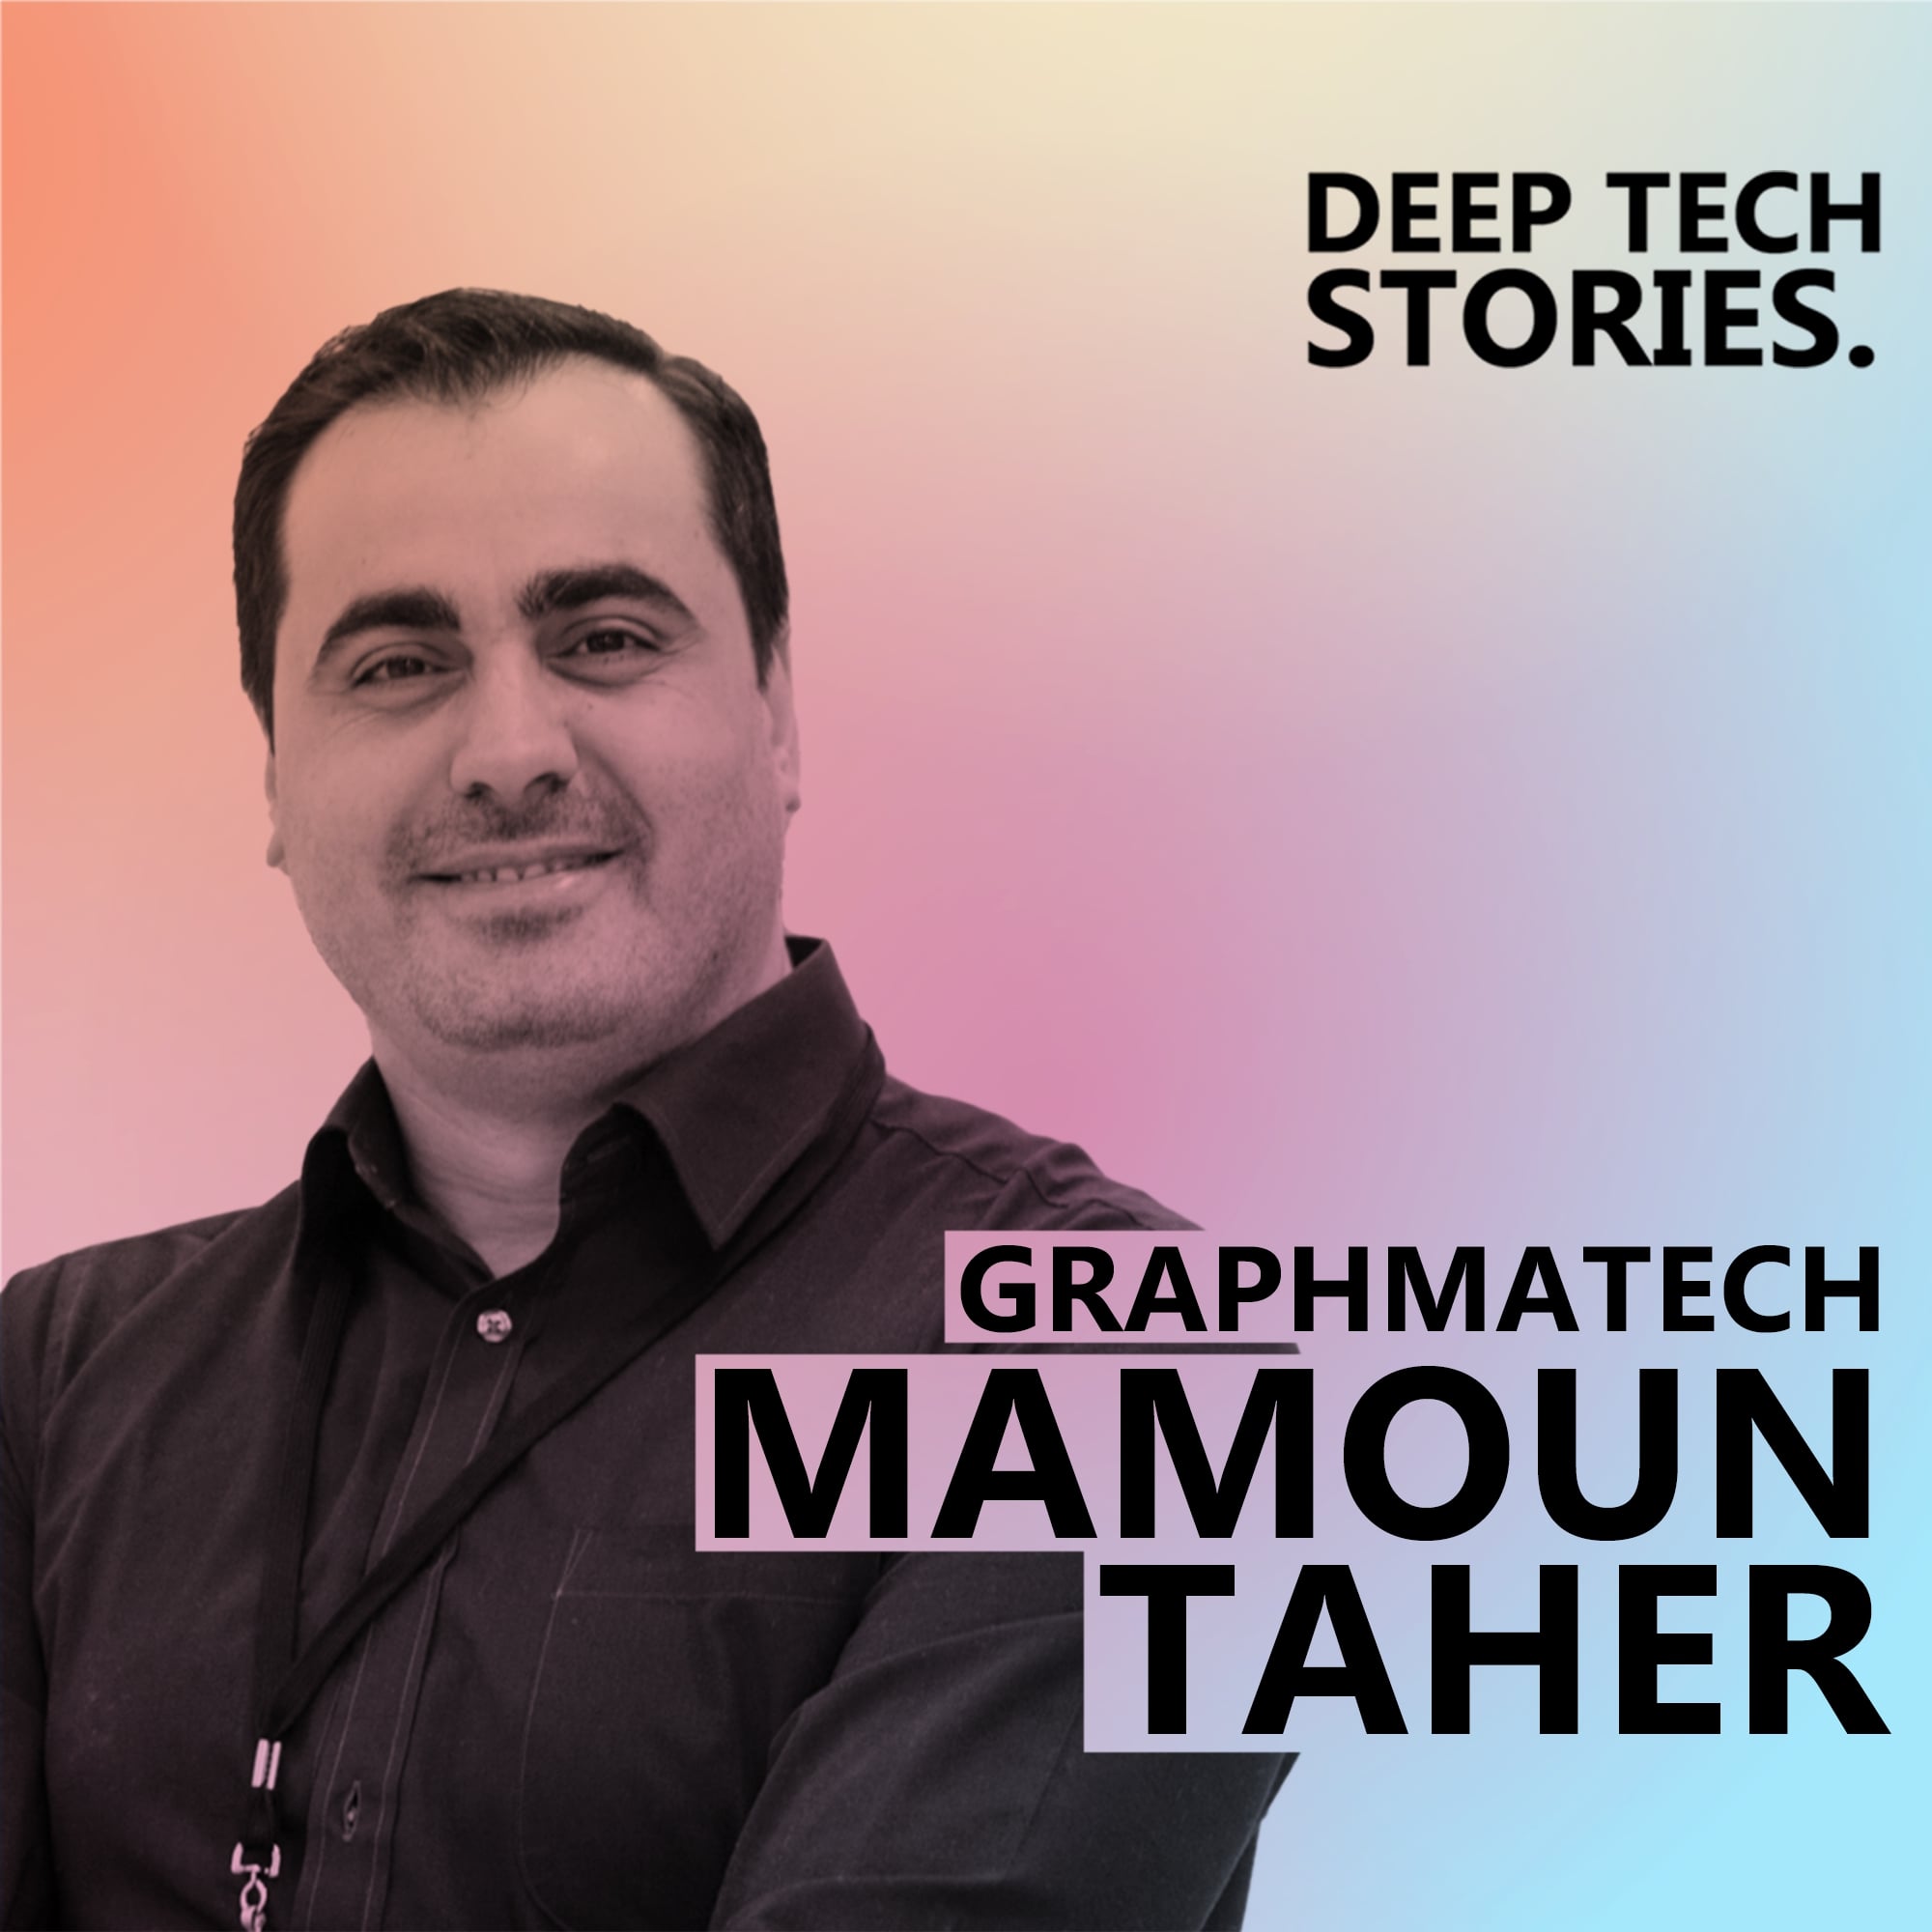 Mamoun Taher on Graphamtech's origin story Image